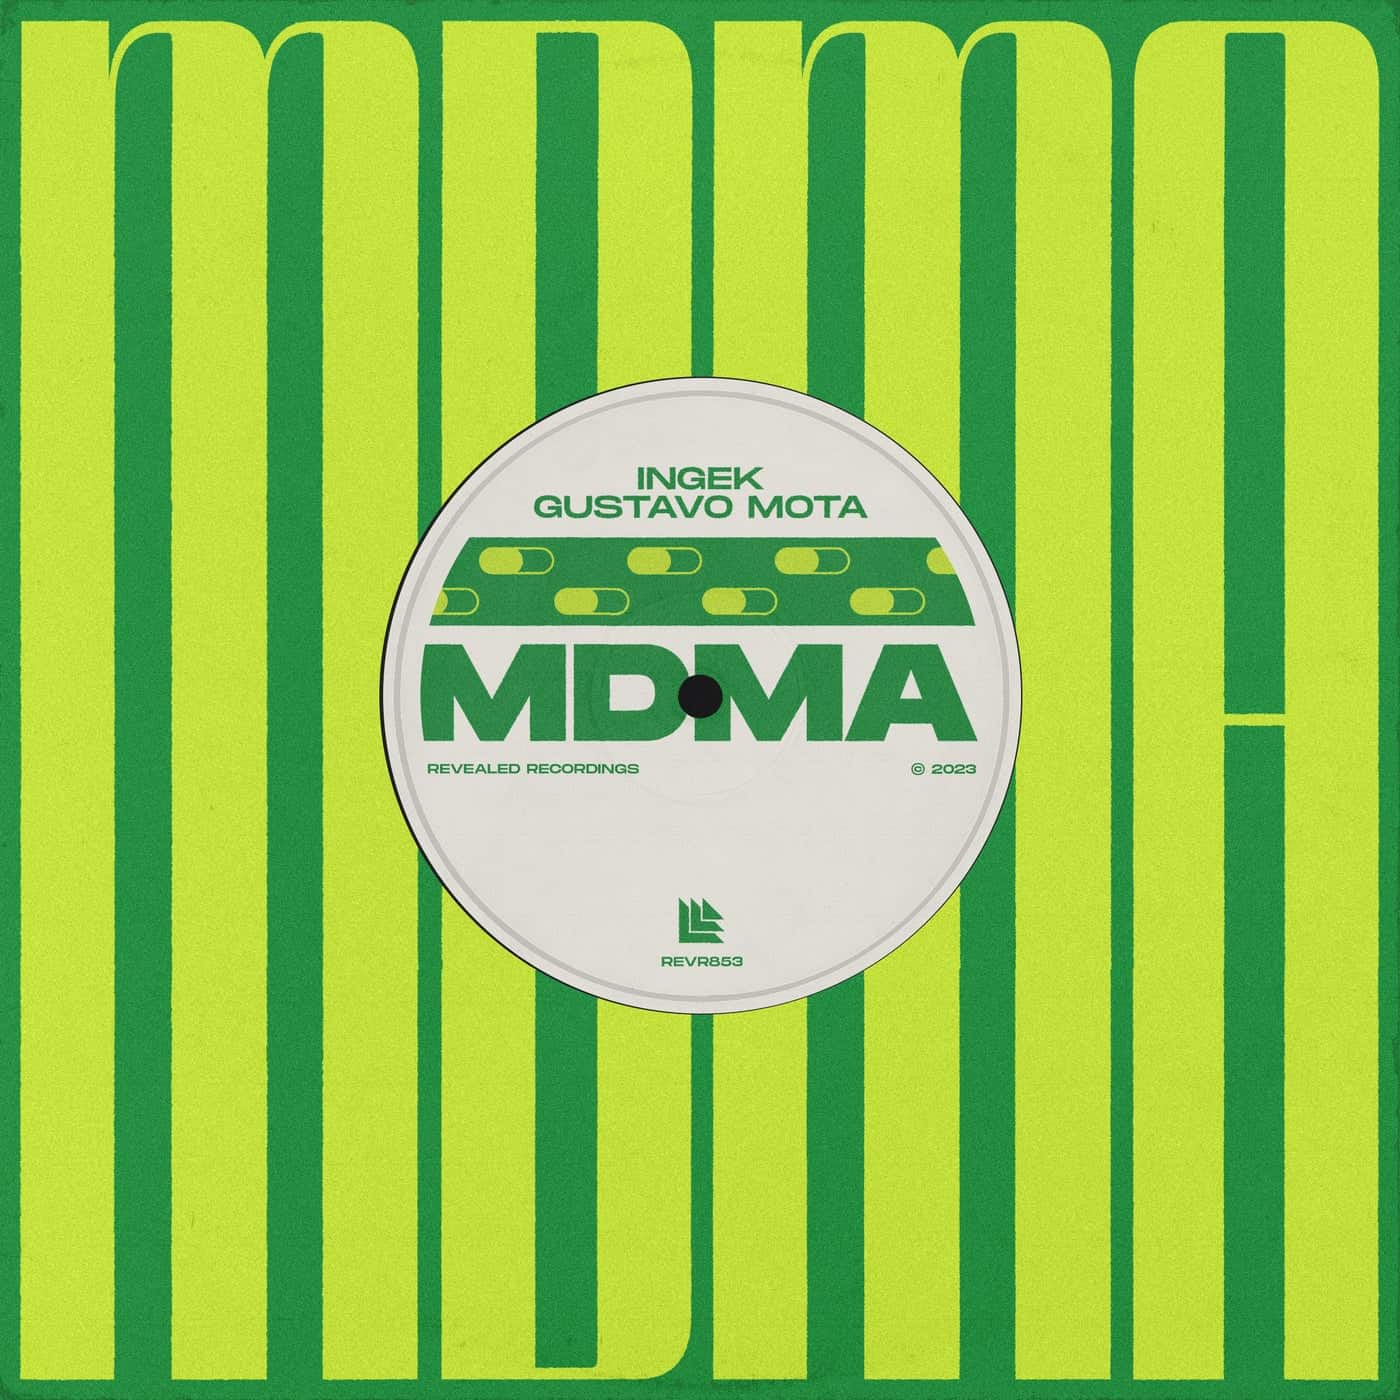 Download Gustavo Mota, INGEK - MDMA on Electrobuzz